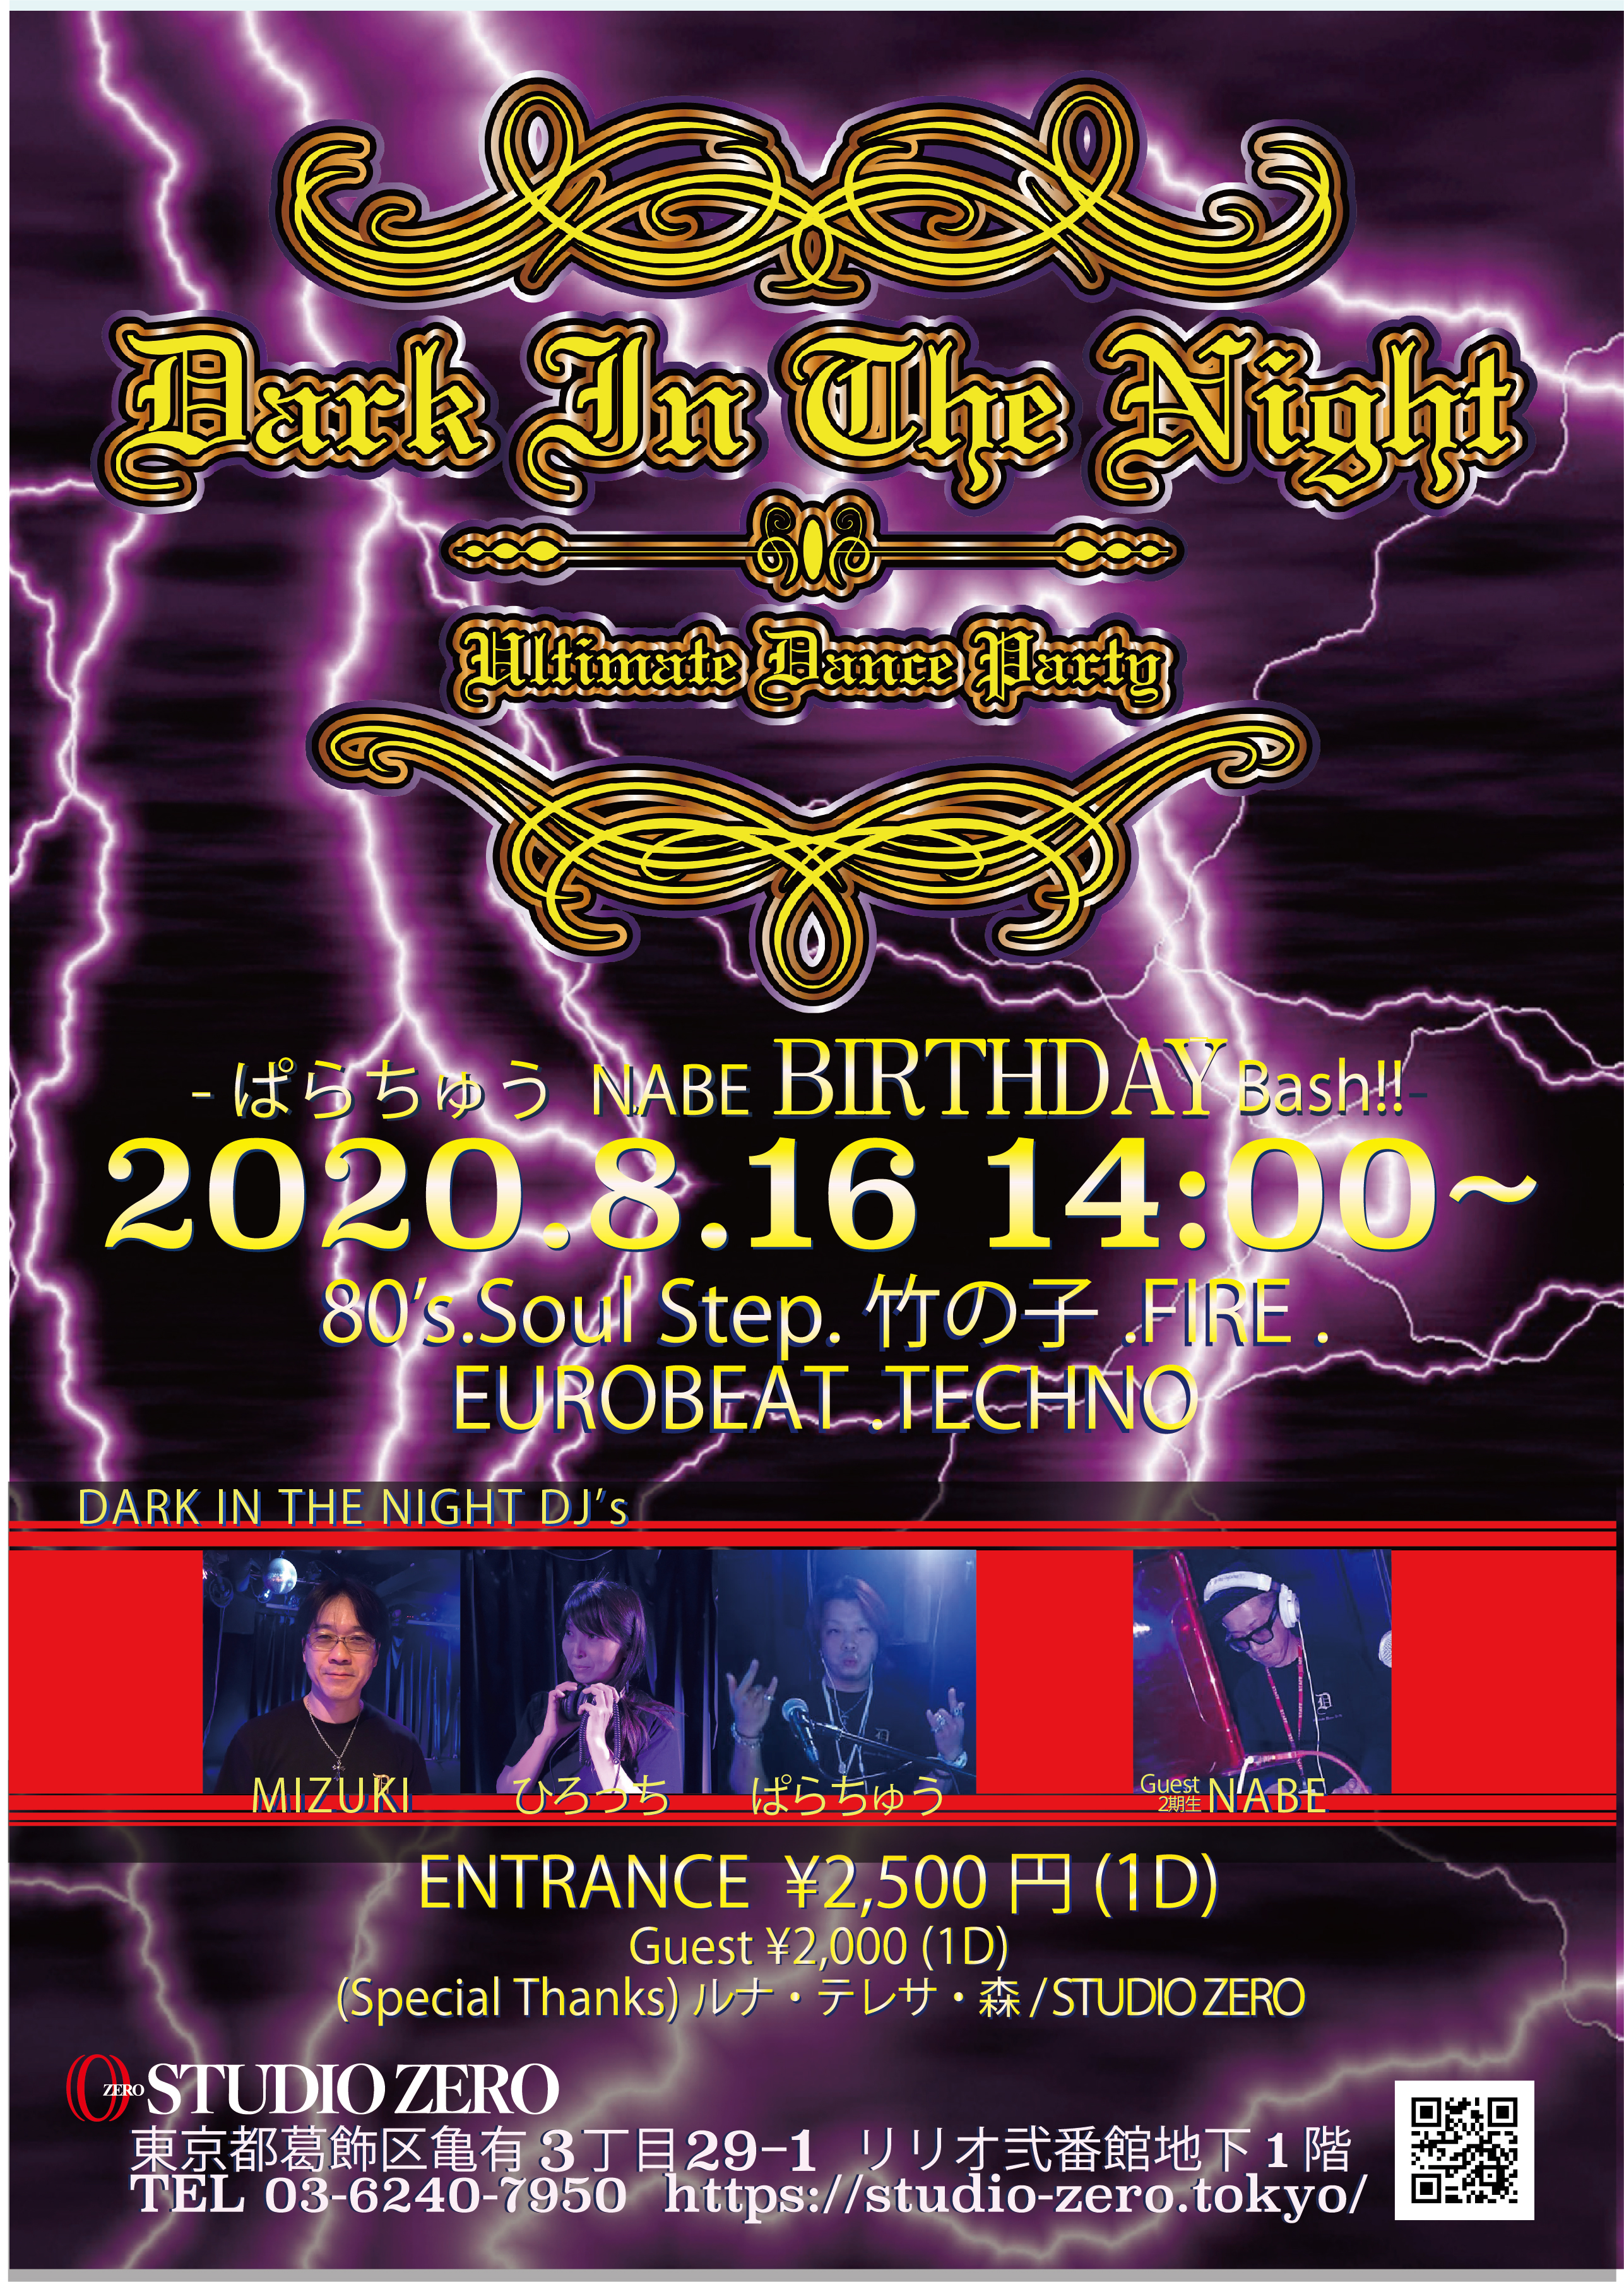 Dark In The Night 14 00 Open スタジオゼロ